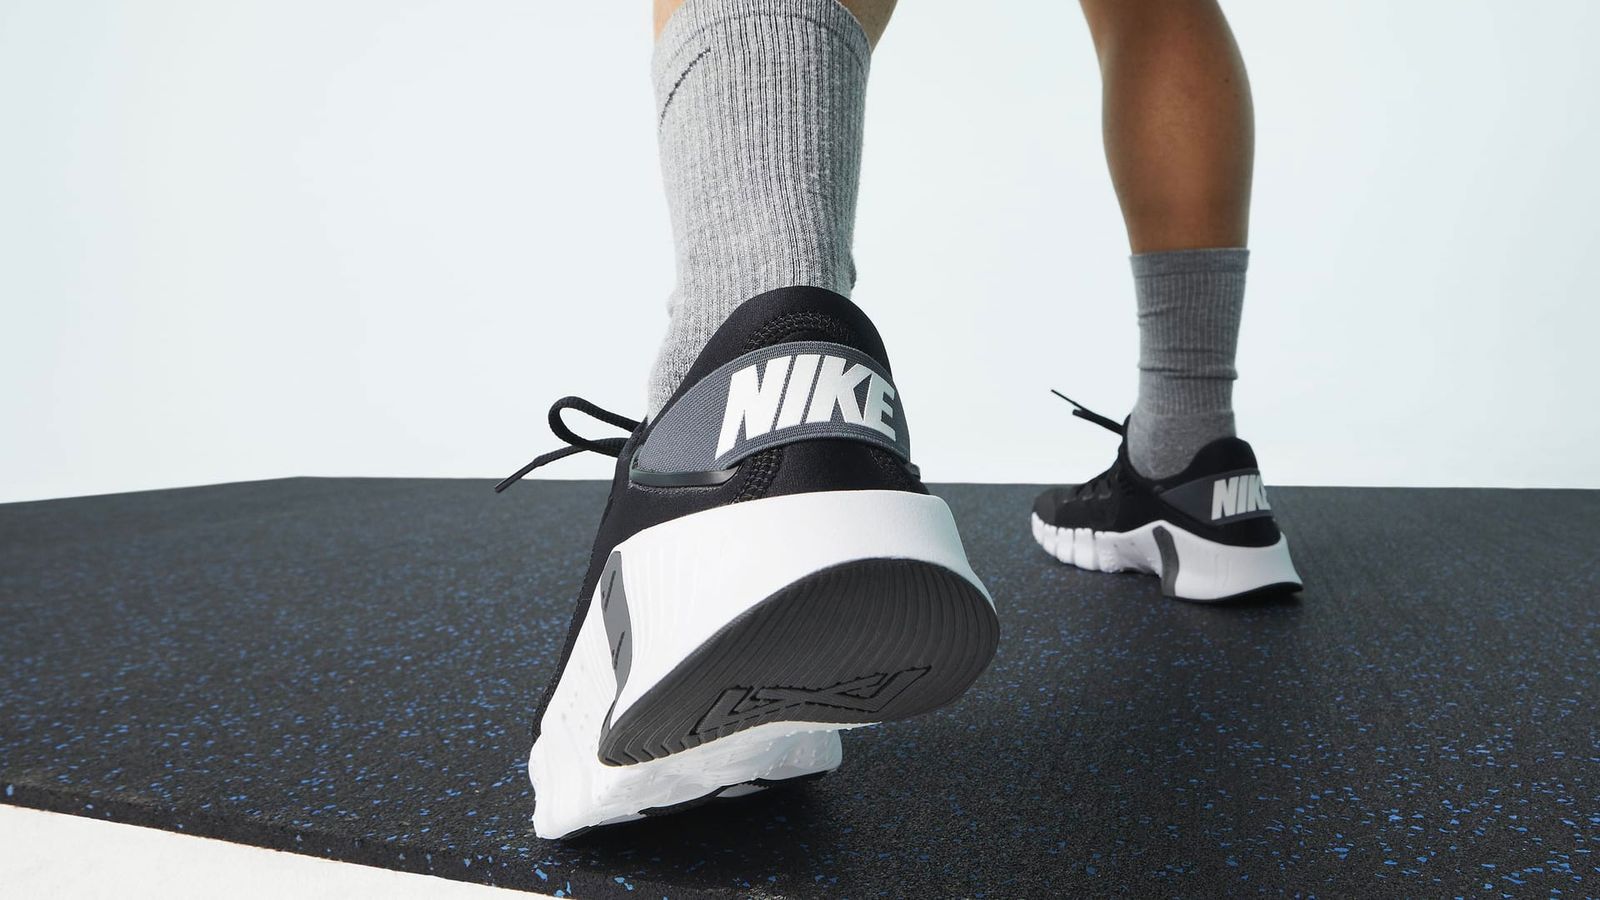 Nike vs Jordan sizing - Nike Metcon 4 in black on feet.